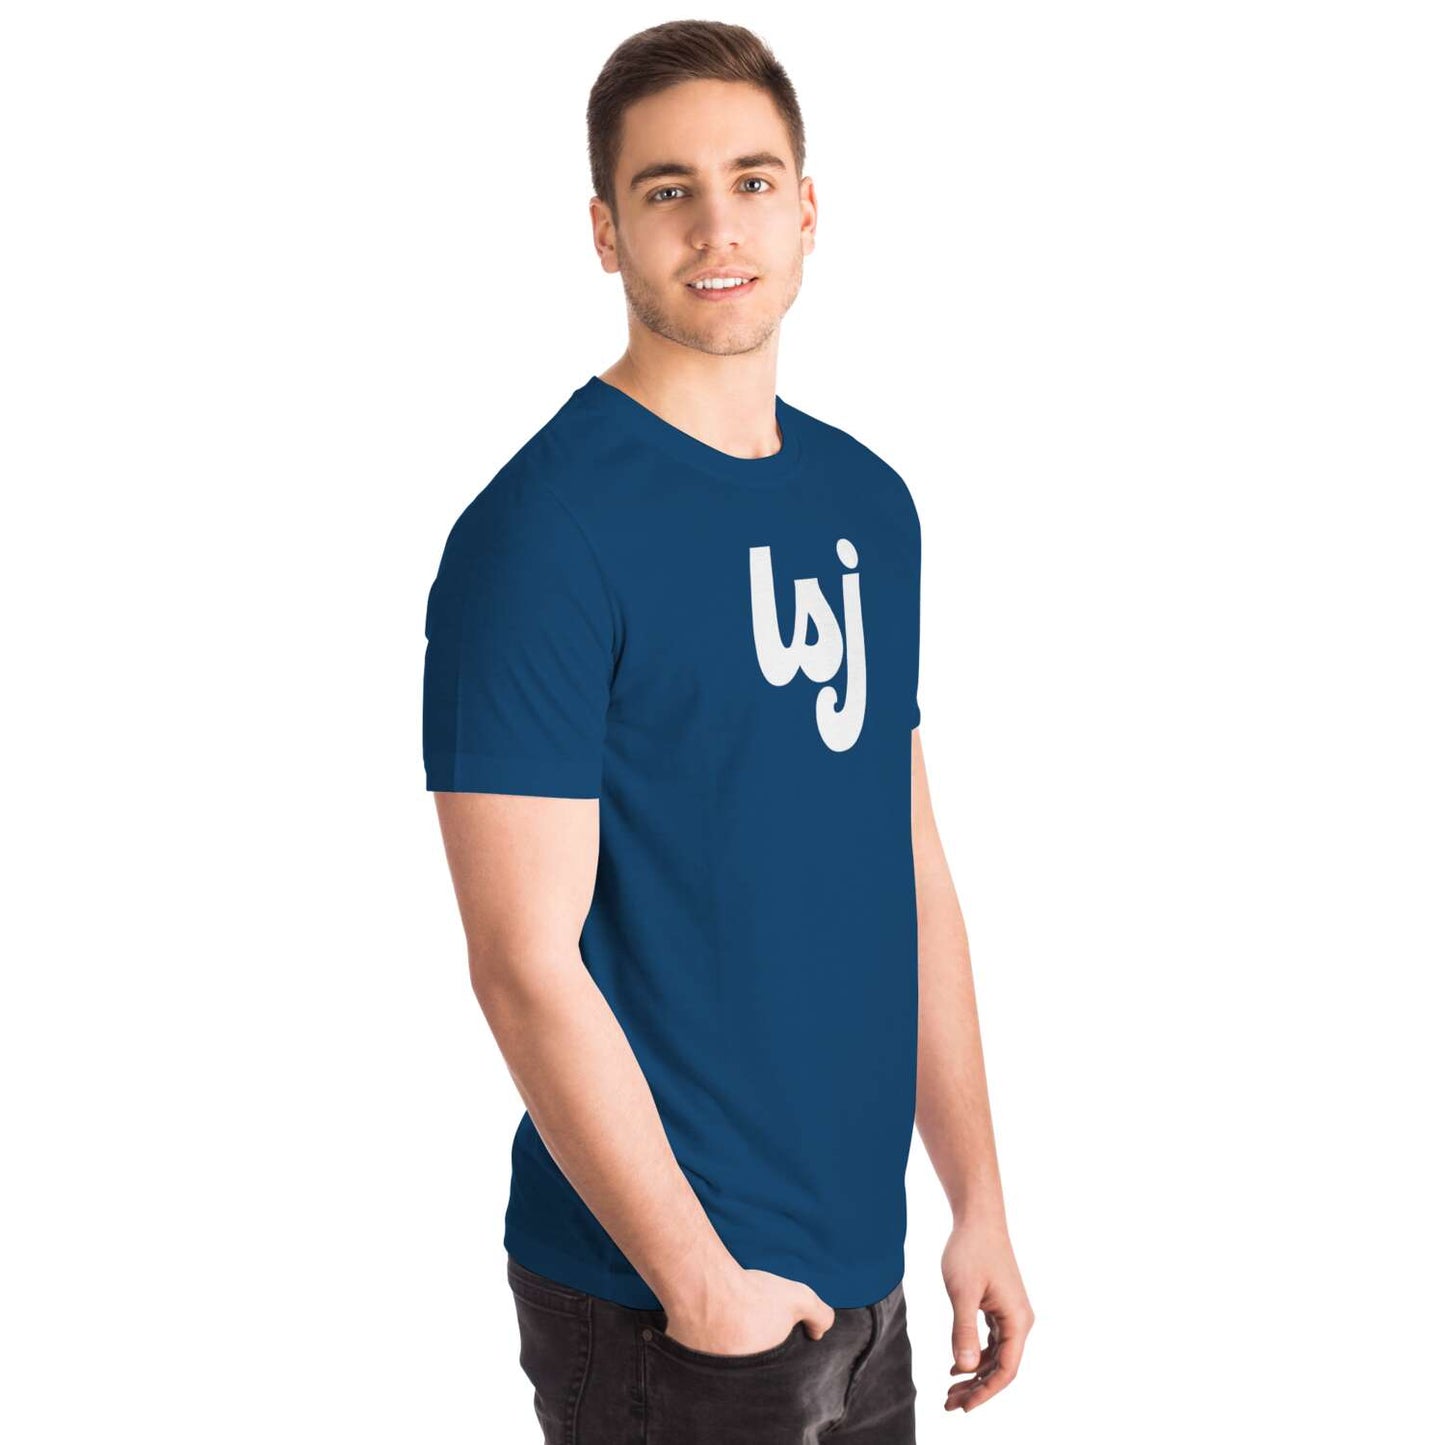 LSJ Brand (Cursive) Navy Blue T-Shirt